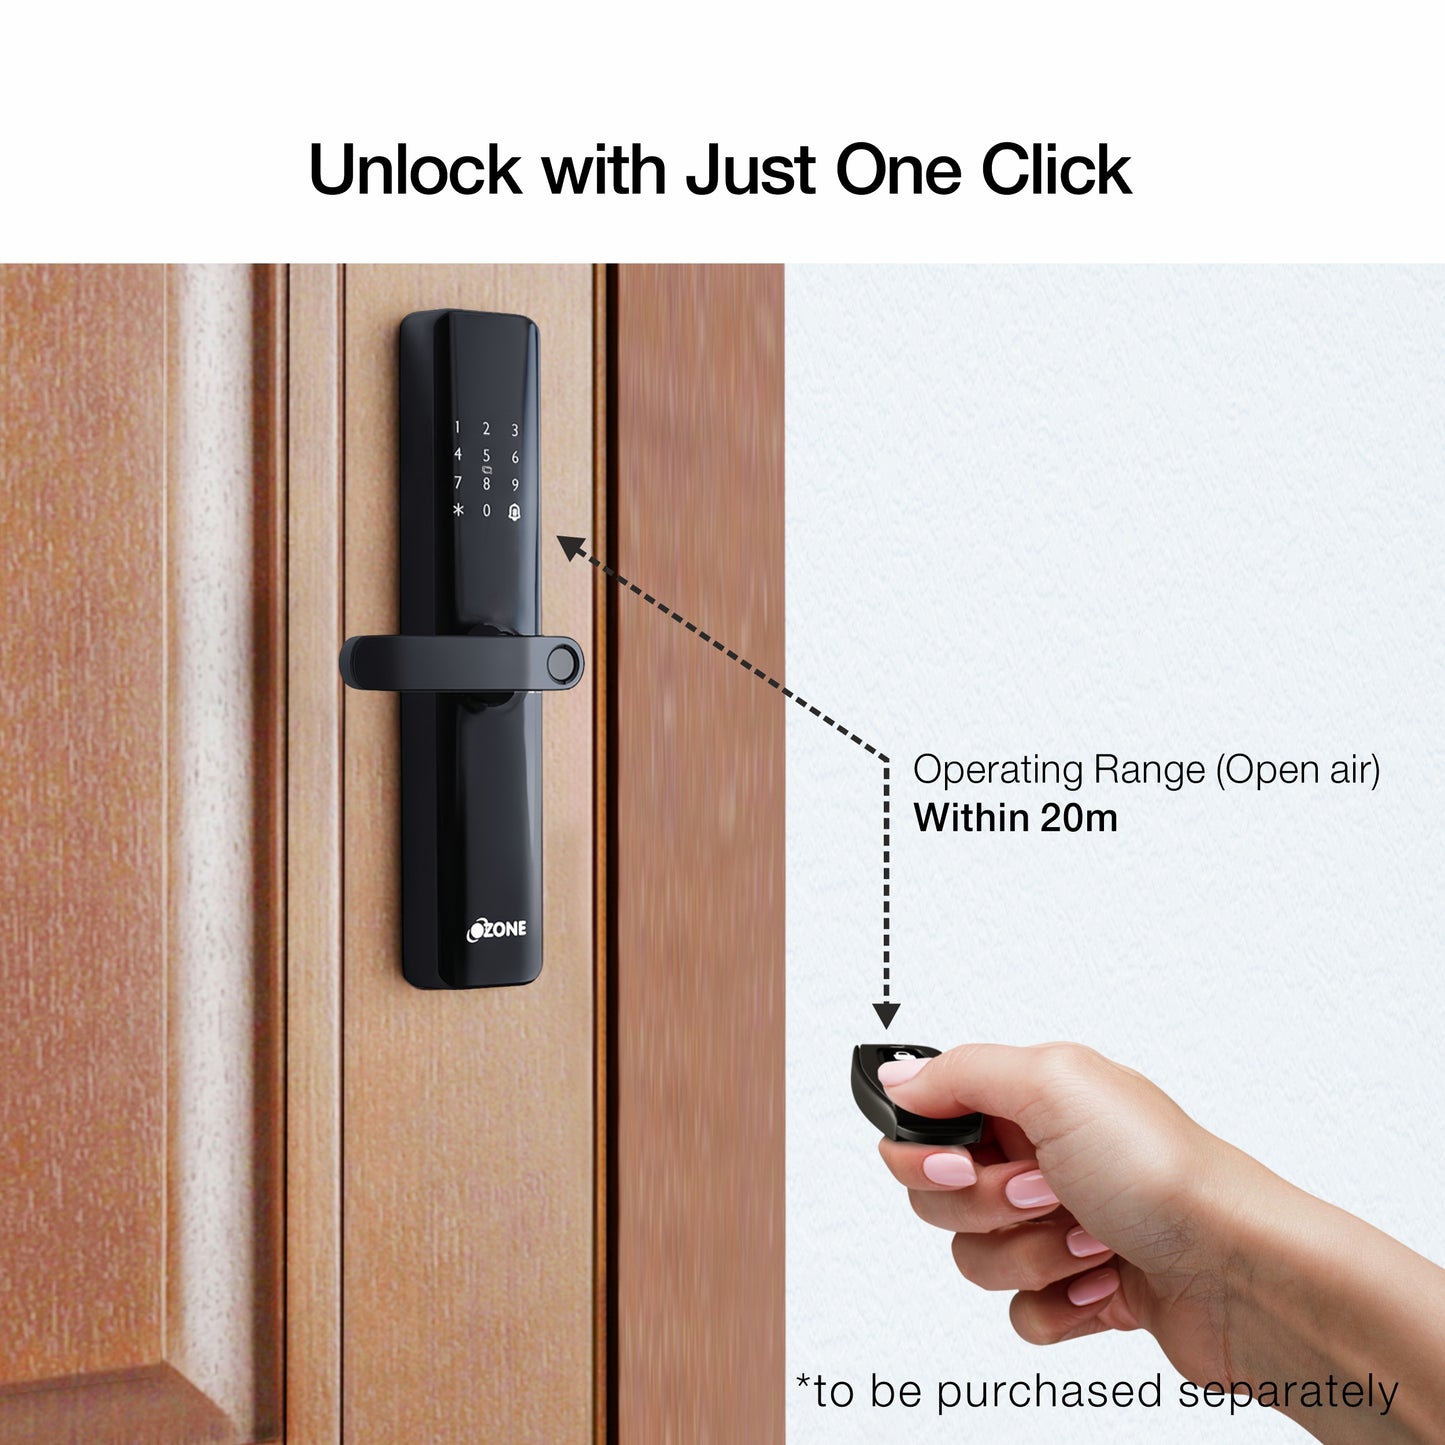 Ozone Iris-11 Wi-Fi Smart Lock with 5-way access | Door Thickness: 35-110 mm